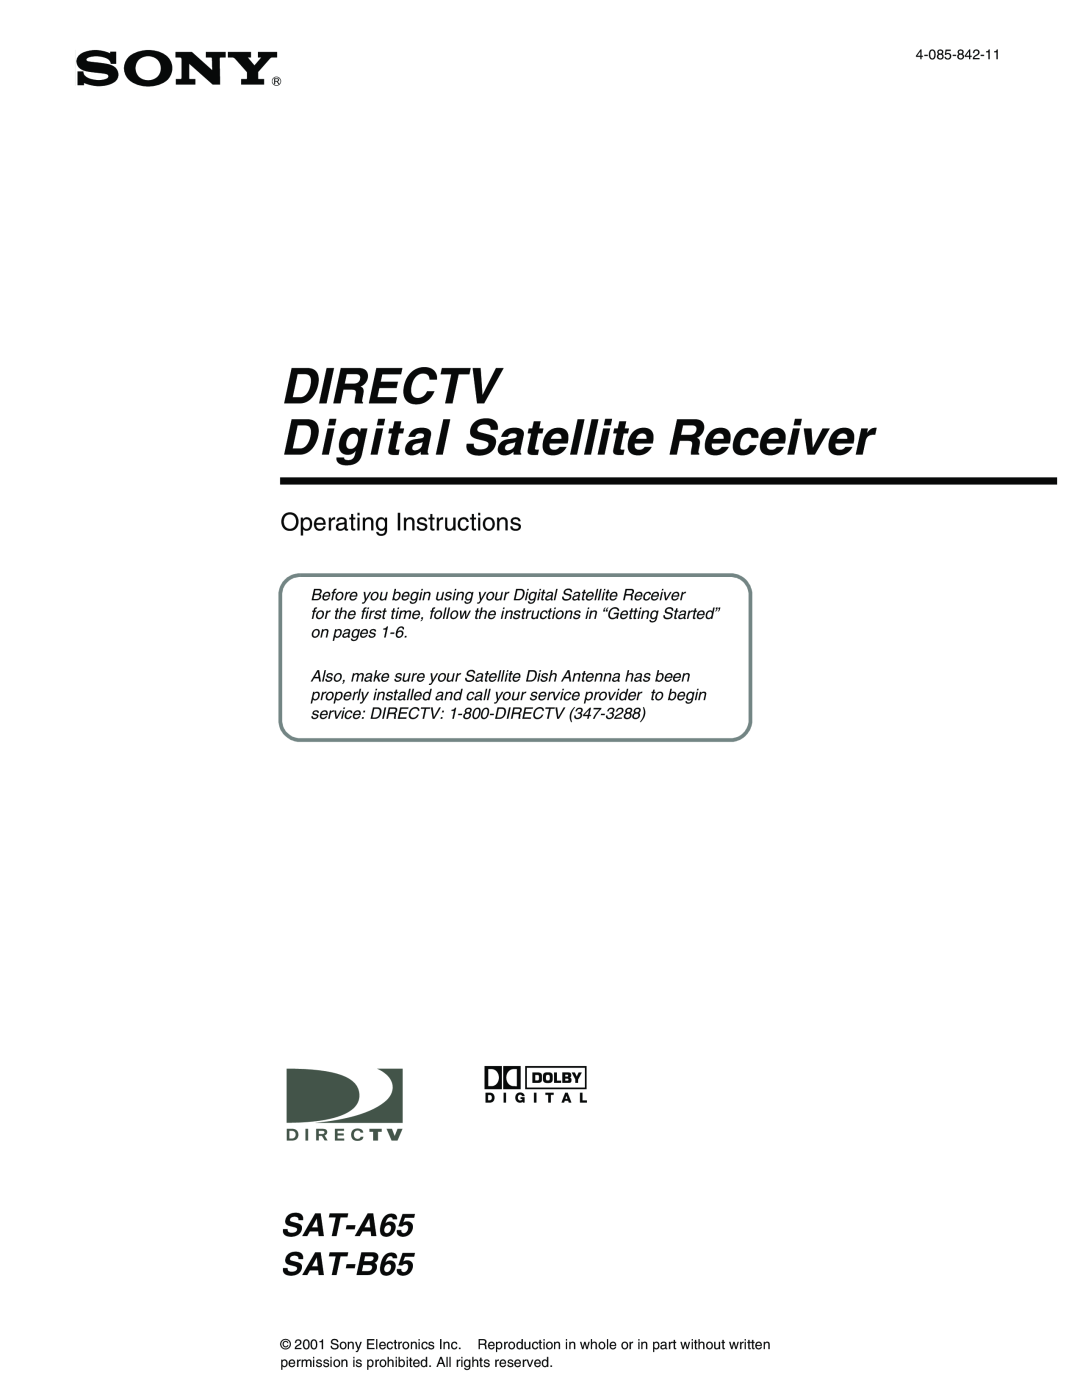 Sony manual DIRECTV Digital Satellite Receiver, SAT-A65 SAT-B65, Operating Instructions 